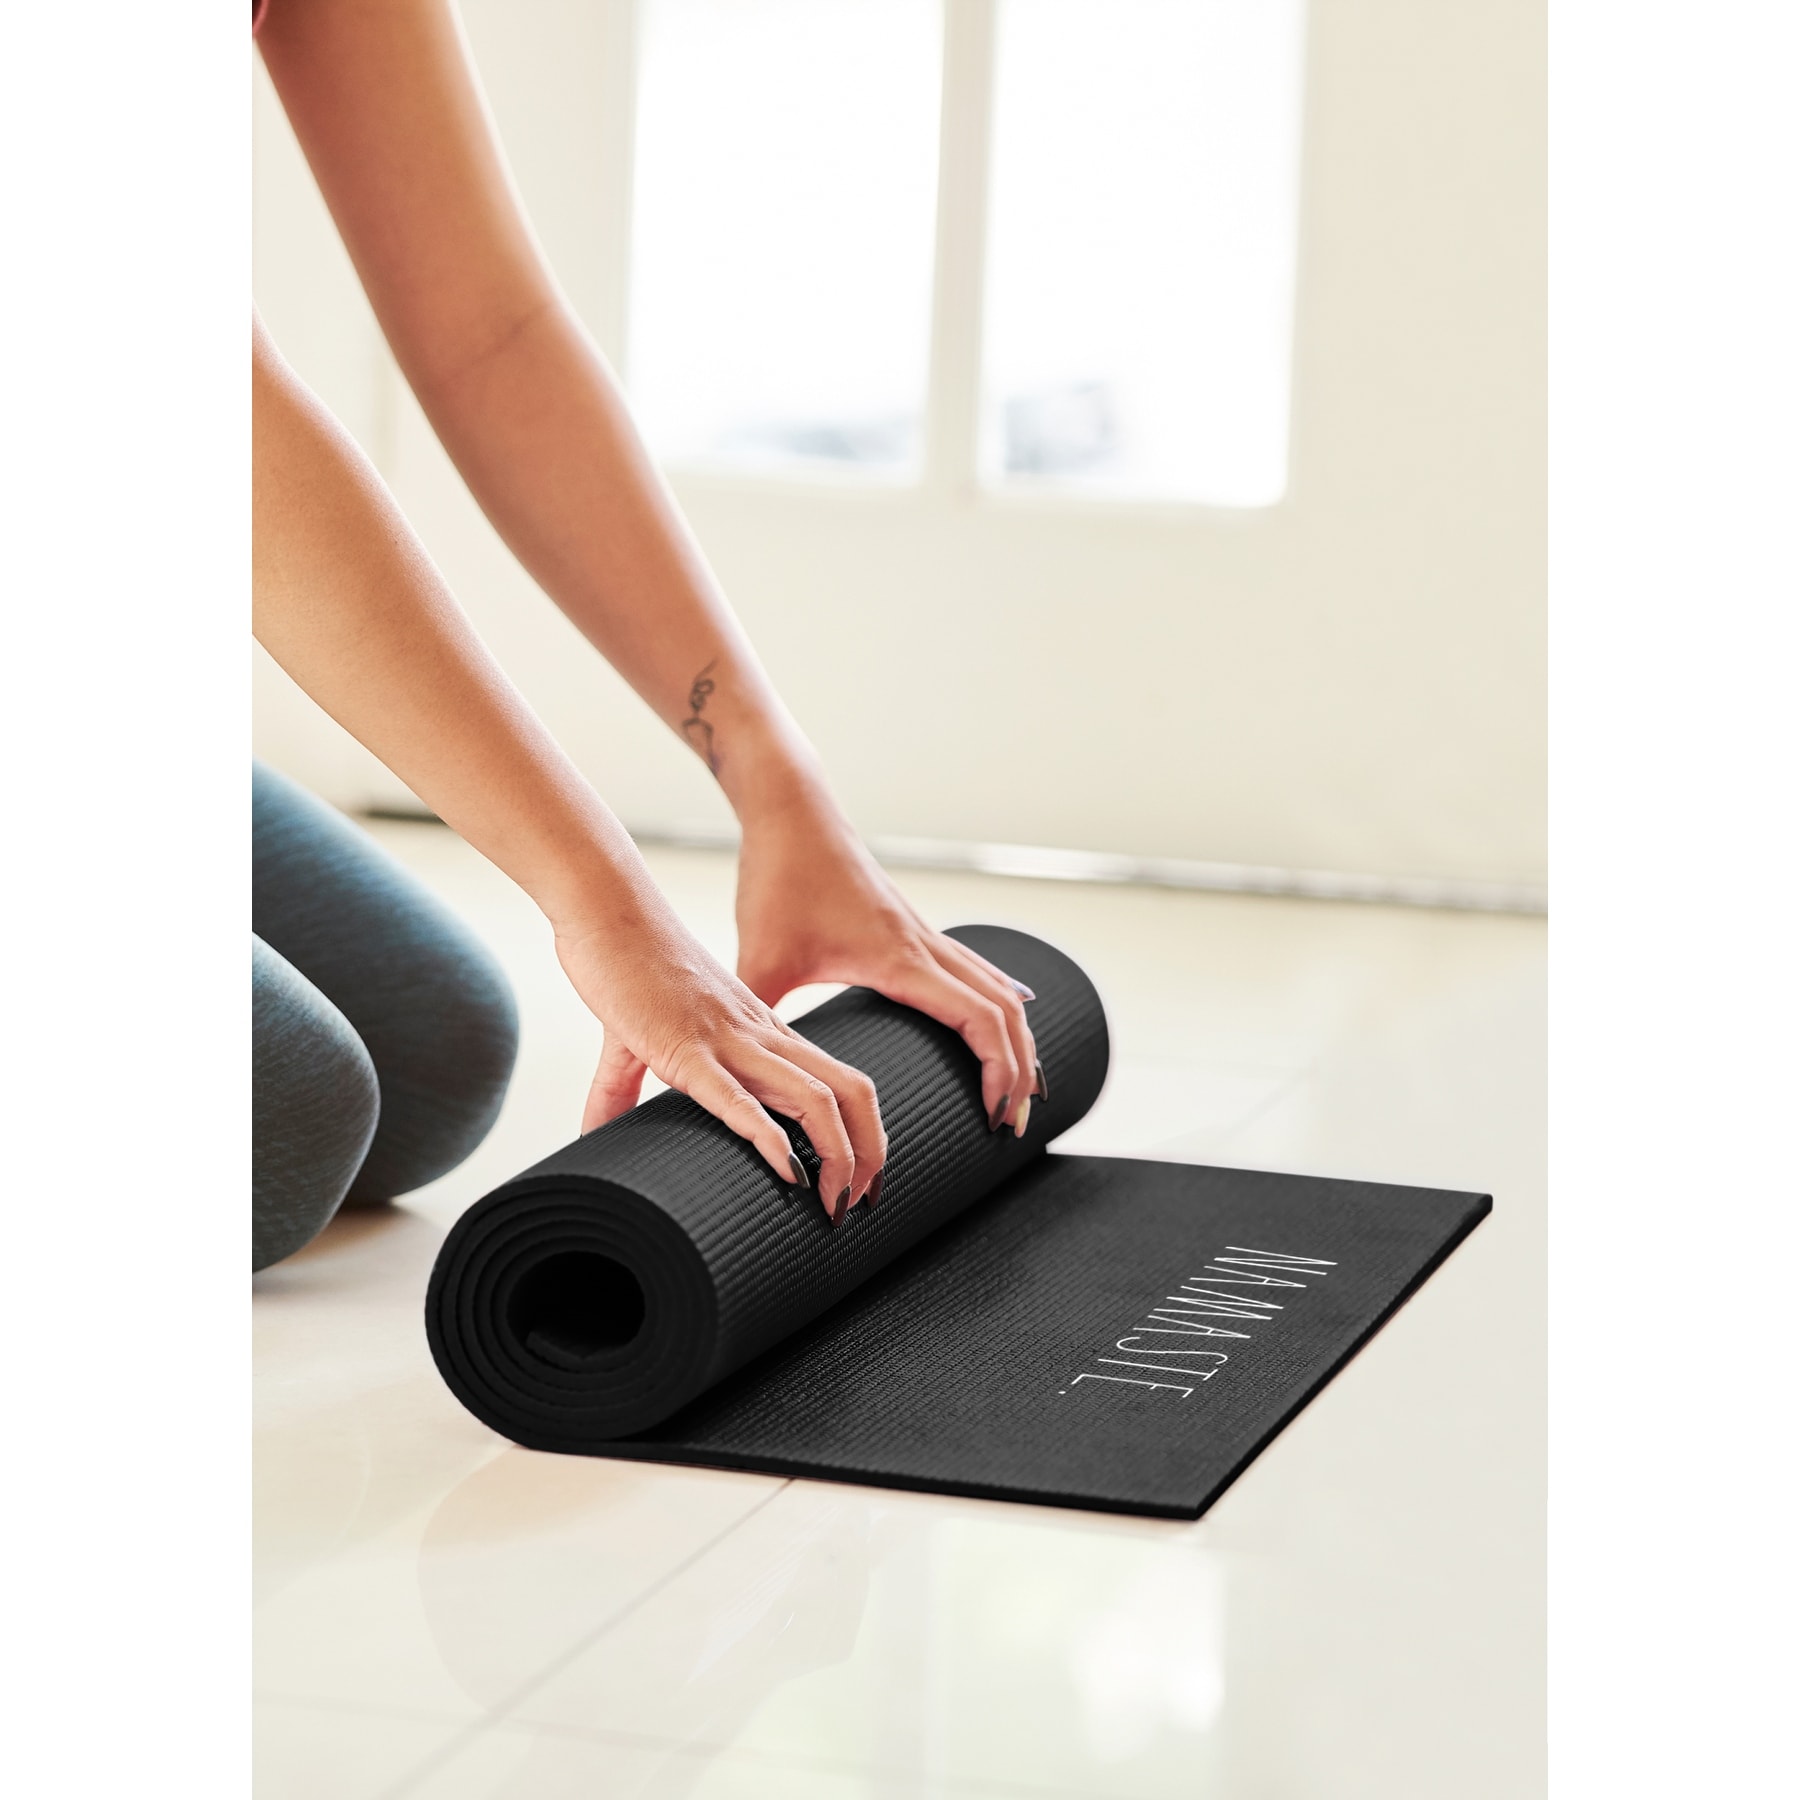 Rae Dunn Yoga/Exercise Mat - 24 x 69 - On Sale - Bed Bath & Beyond -  36251170